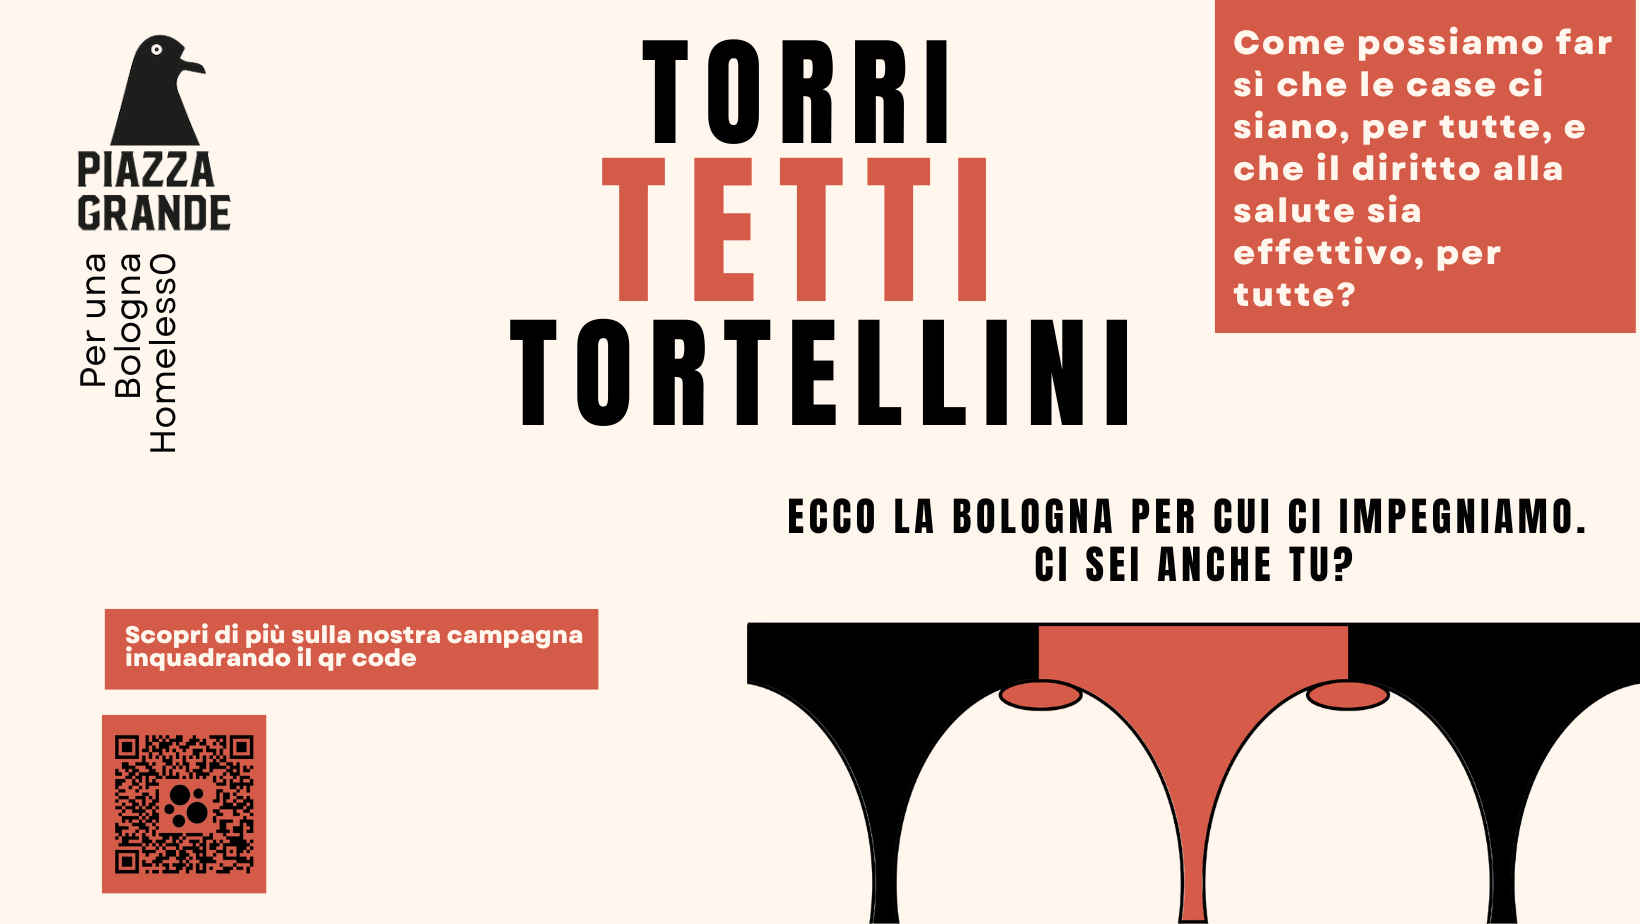 Torri Tetti Tortellini